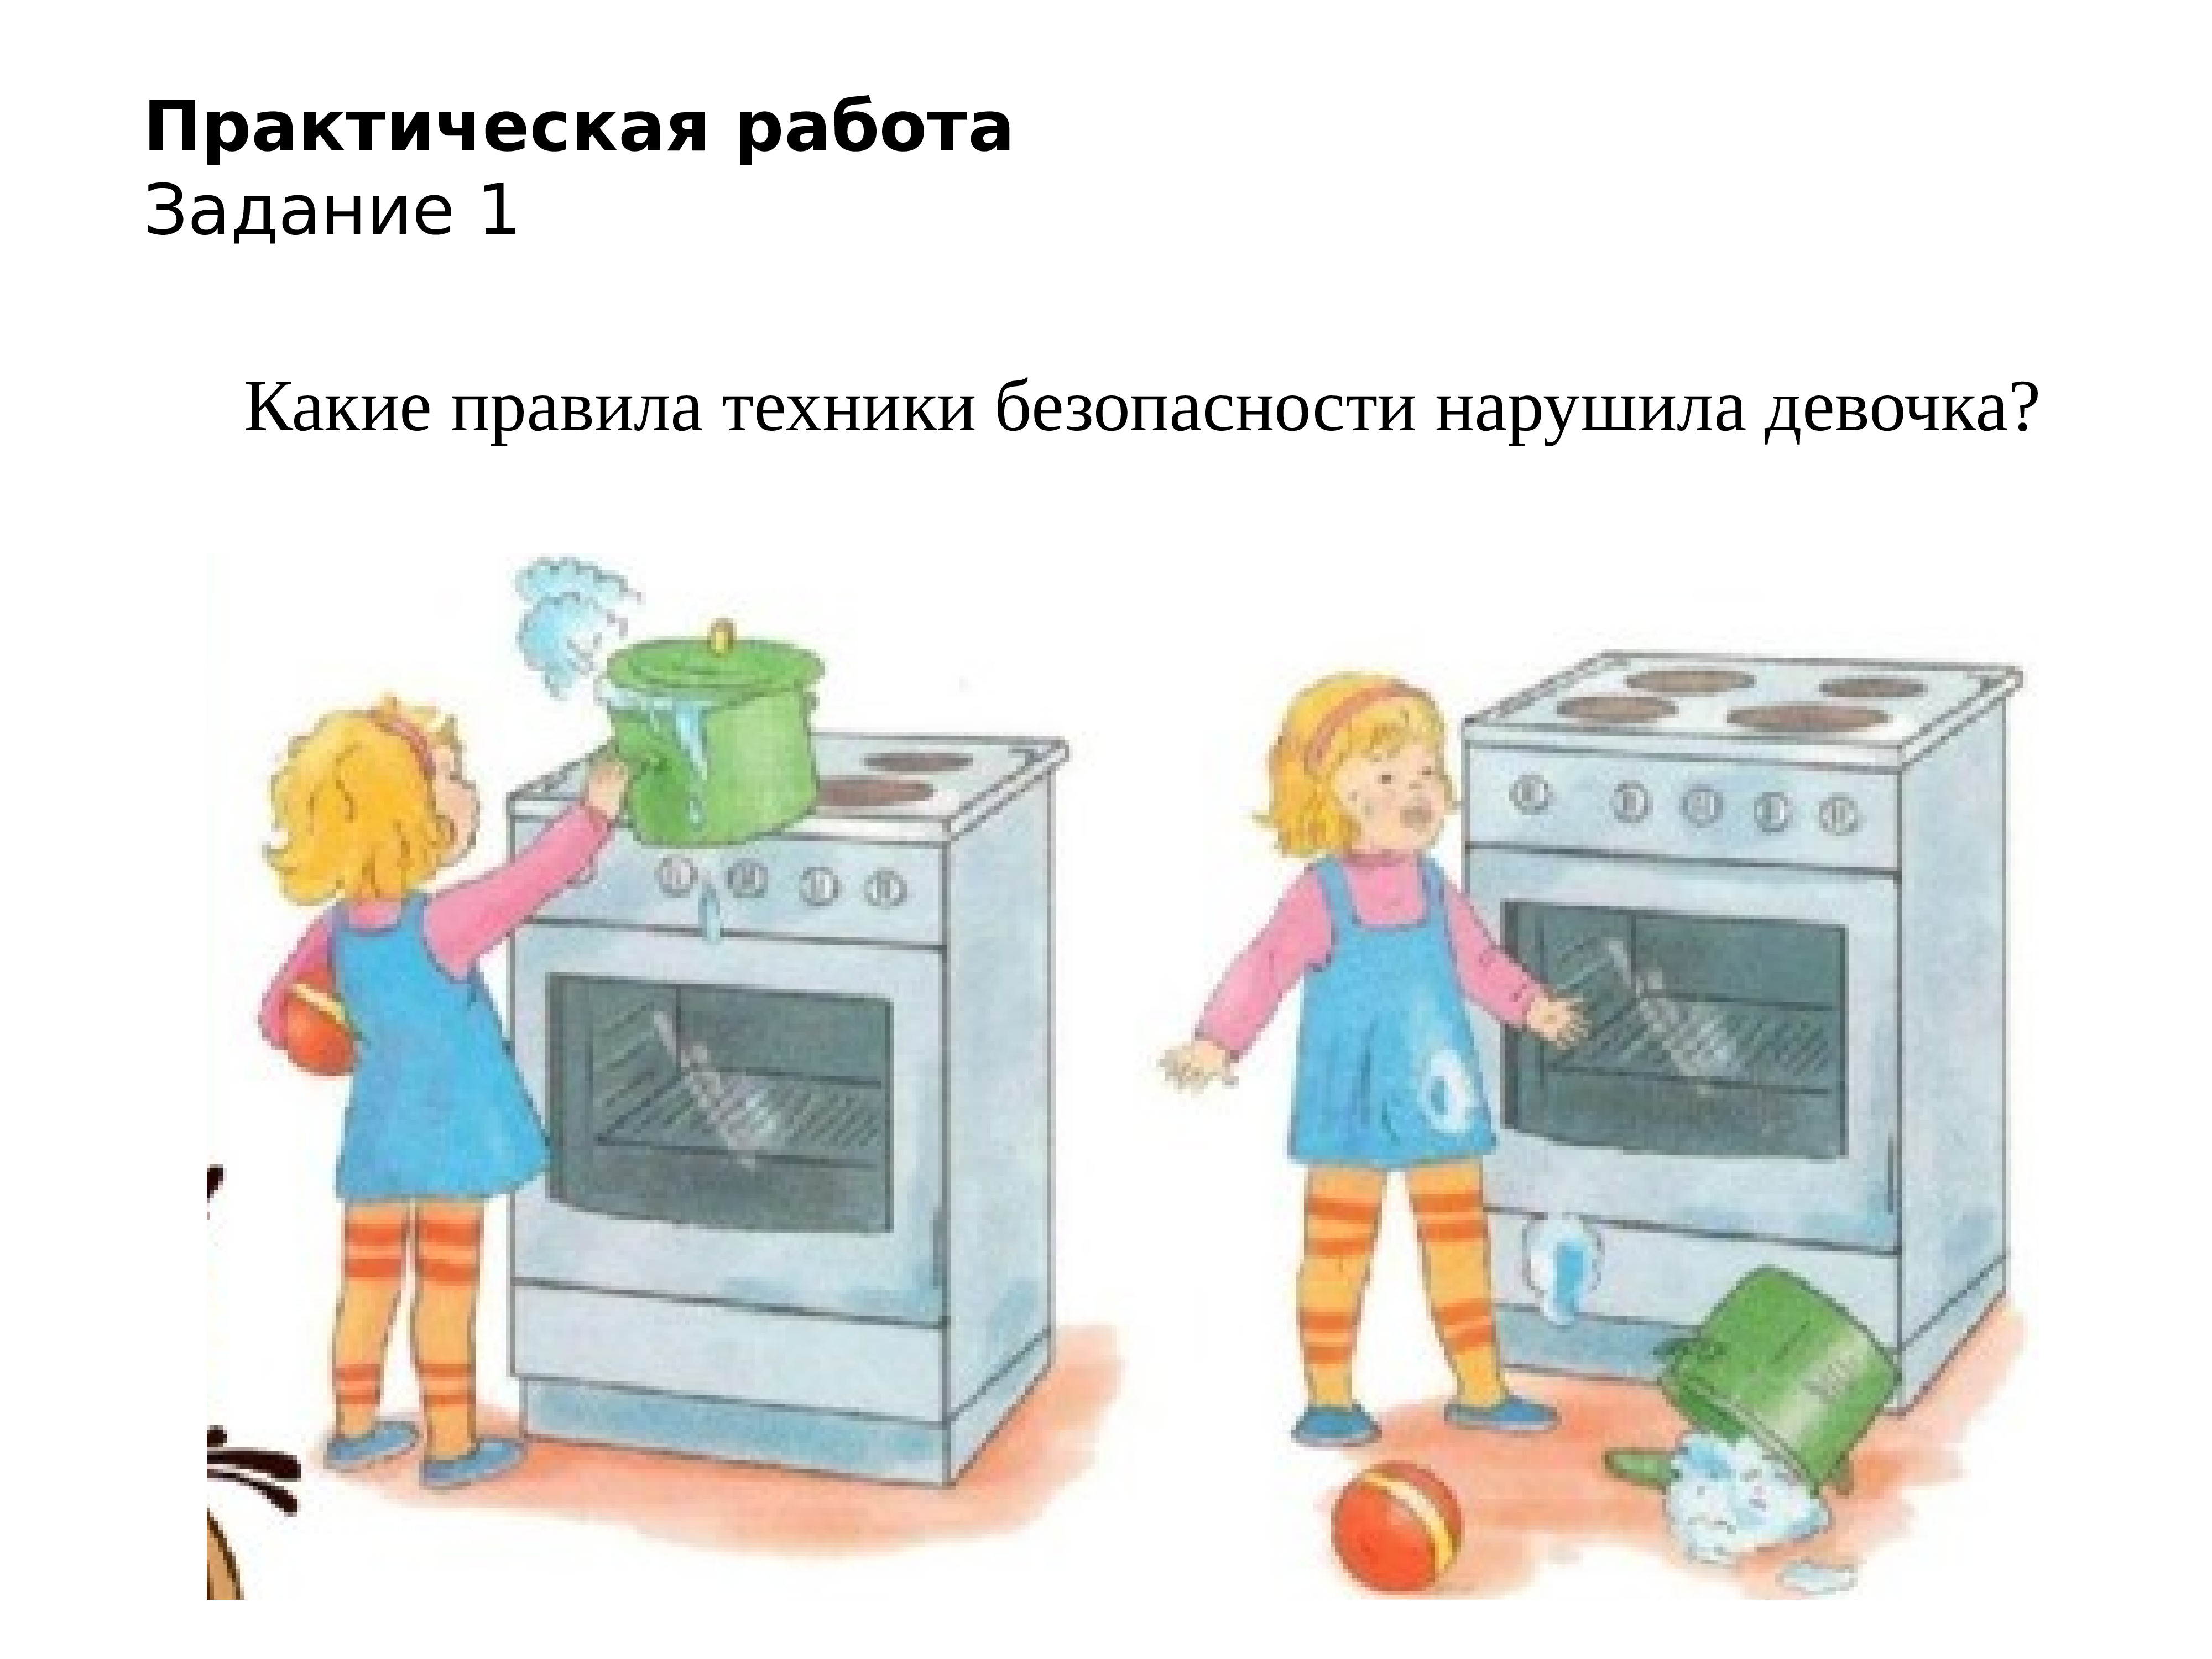 Кипели предложение. Техника безопасности на кухне. Правила безопасности на кухне для детей. Правила работы на кухне для детей. Правил безопасной работы на кухне.